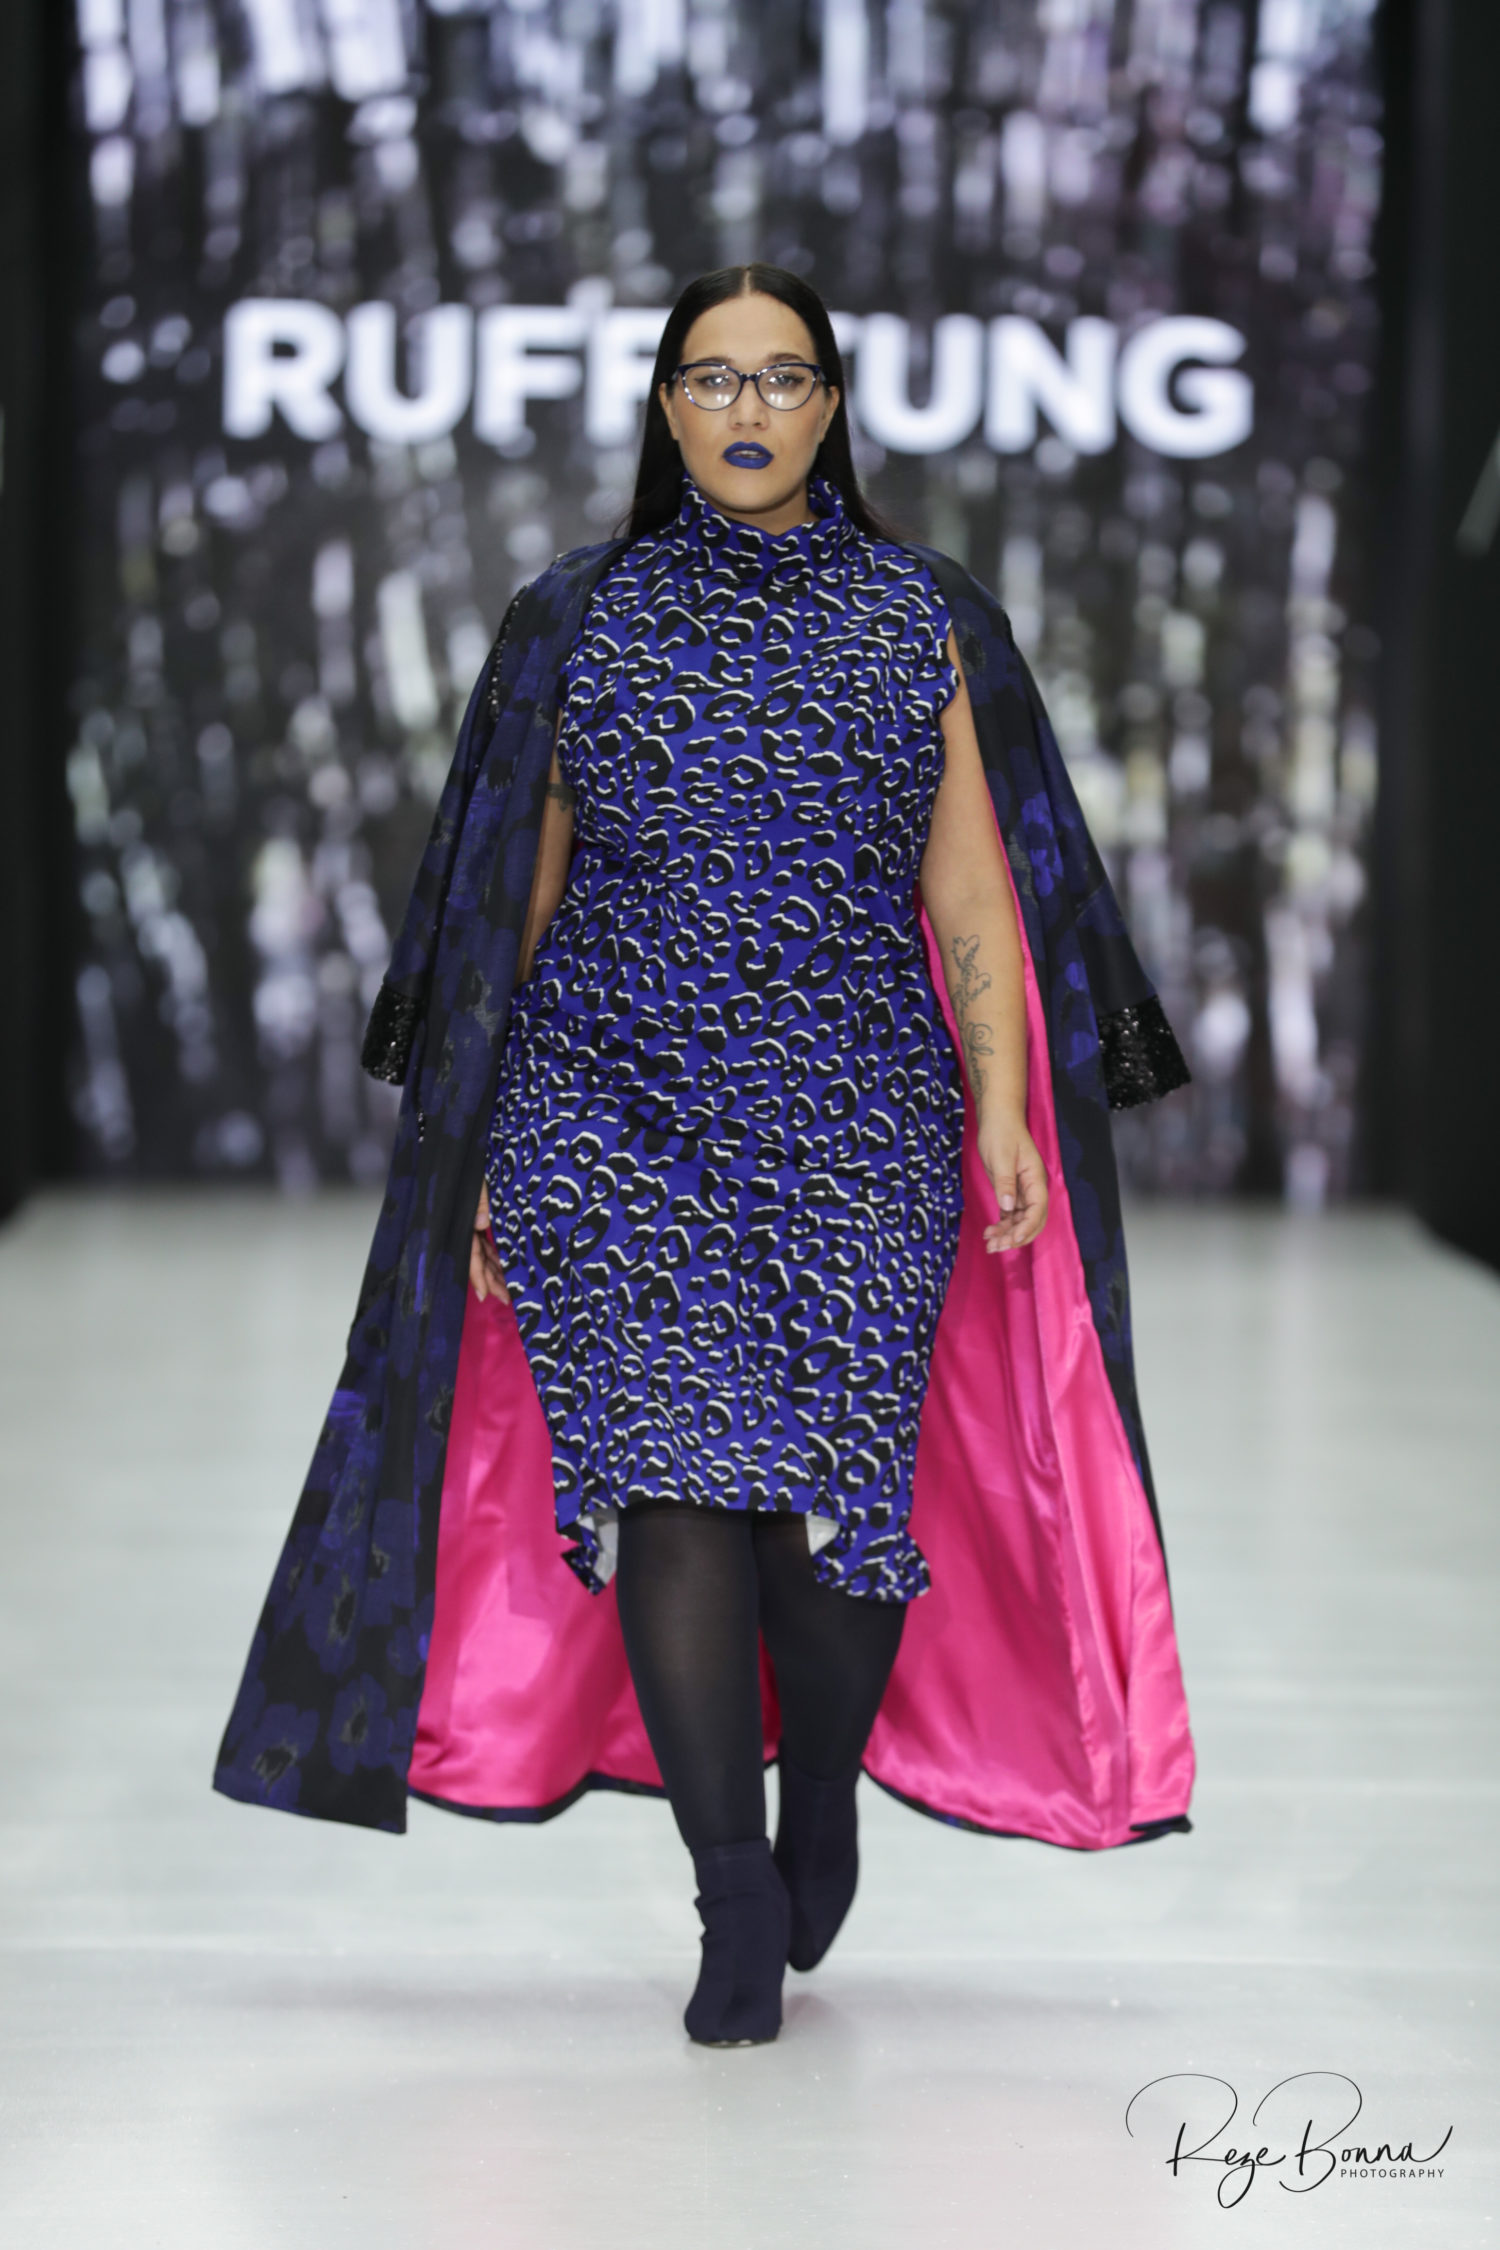 #AFICTFW19 | AFI Capetown Fashion Week Ruff Tung